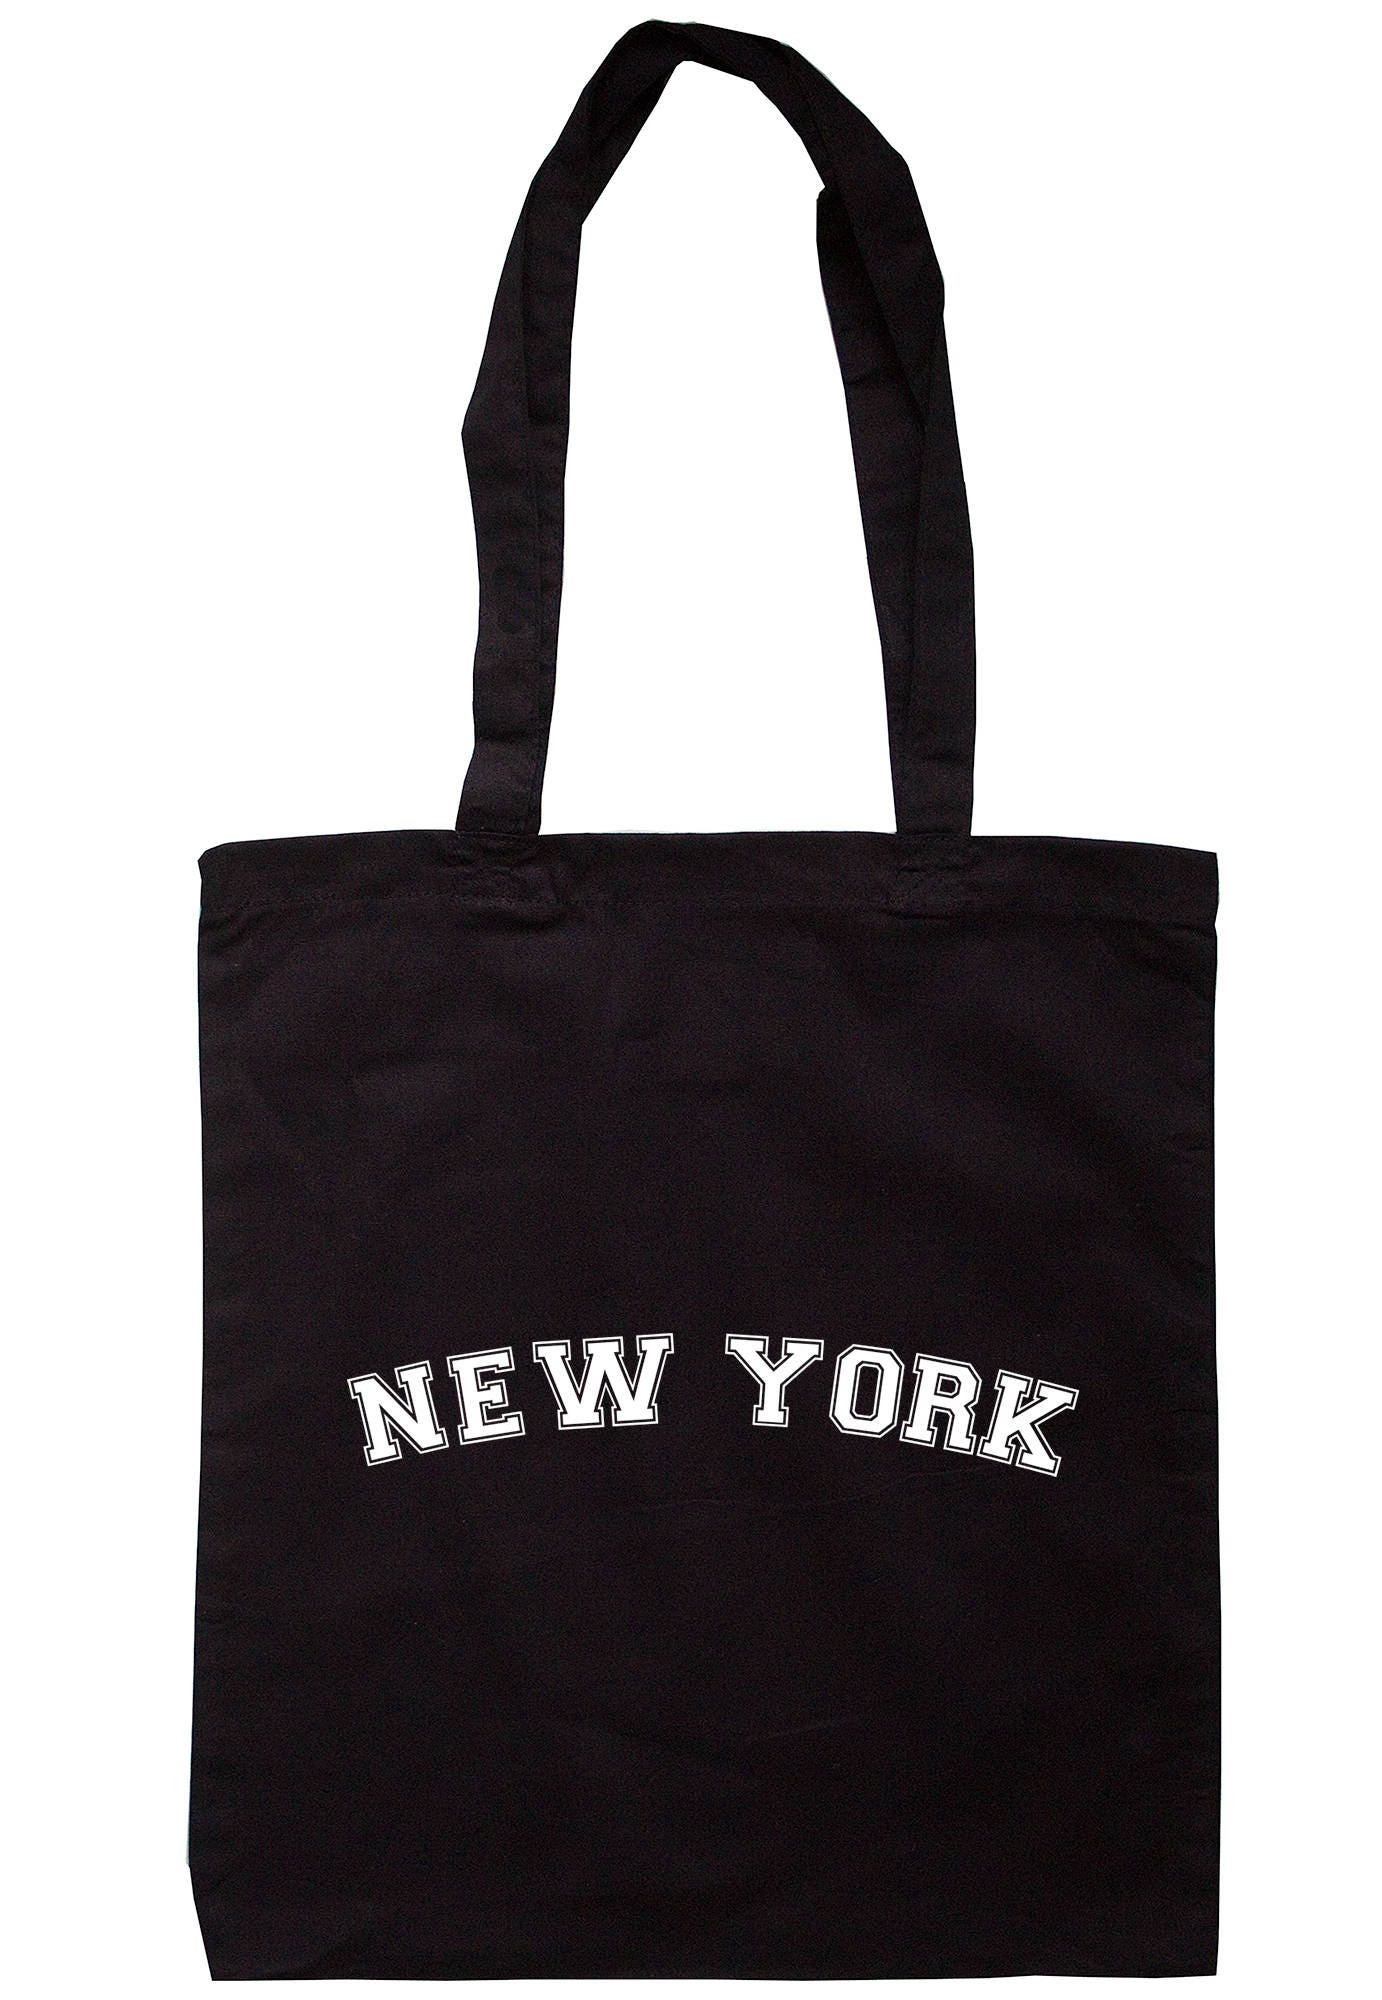 New York Tote Bag Long Handles TB0923 | Etsy